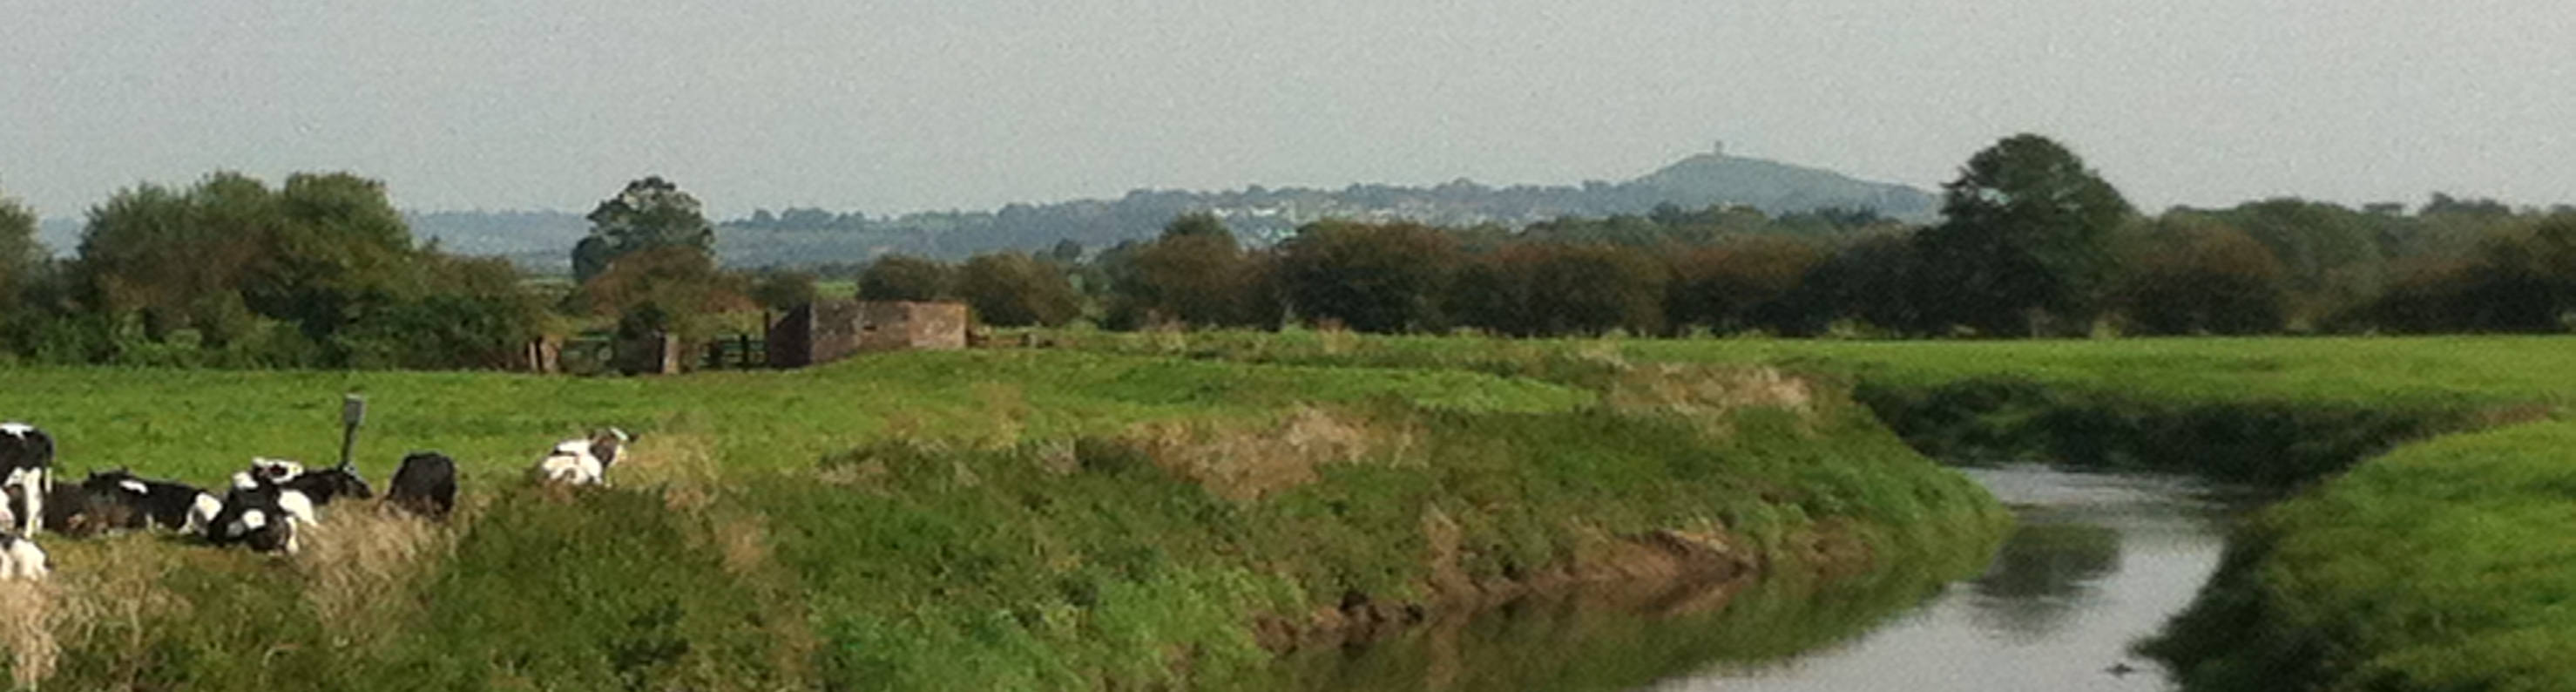 Landscape of Moors and Glastonbury Tor